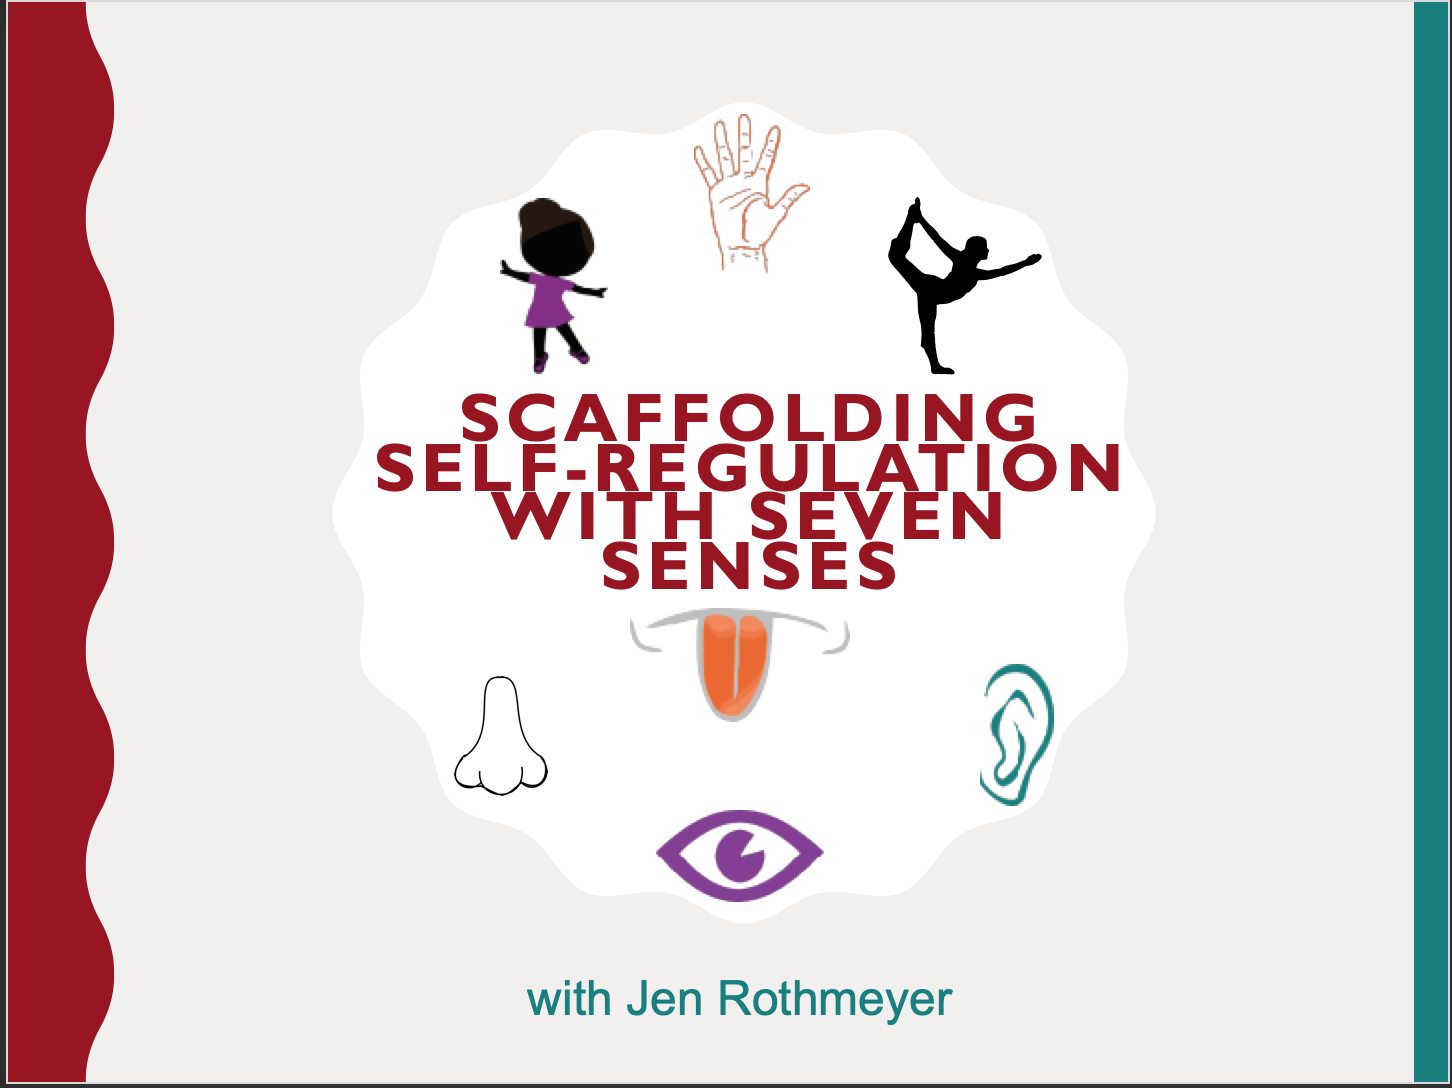 Scaffolding Self-Regulation with Seven Senses